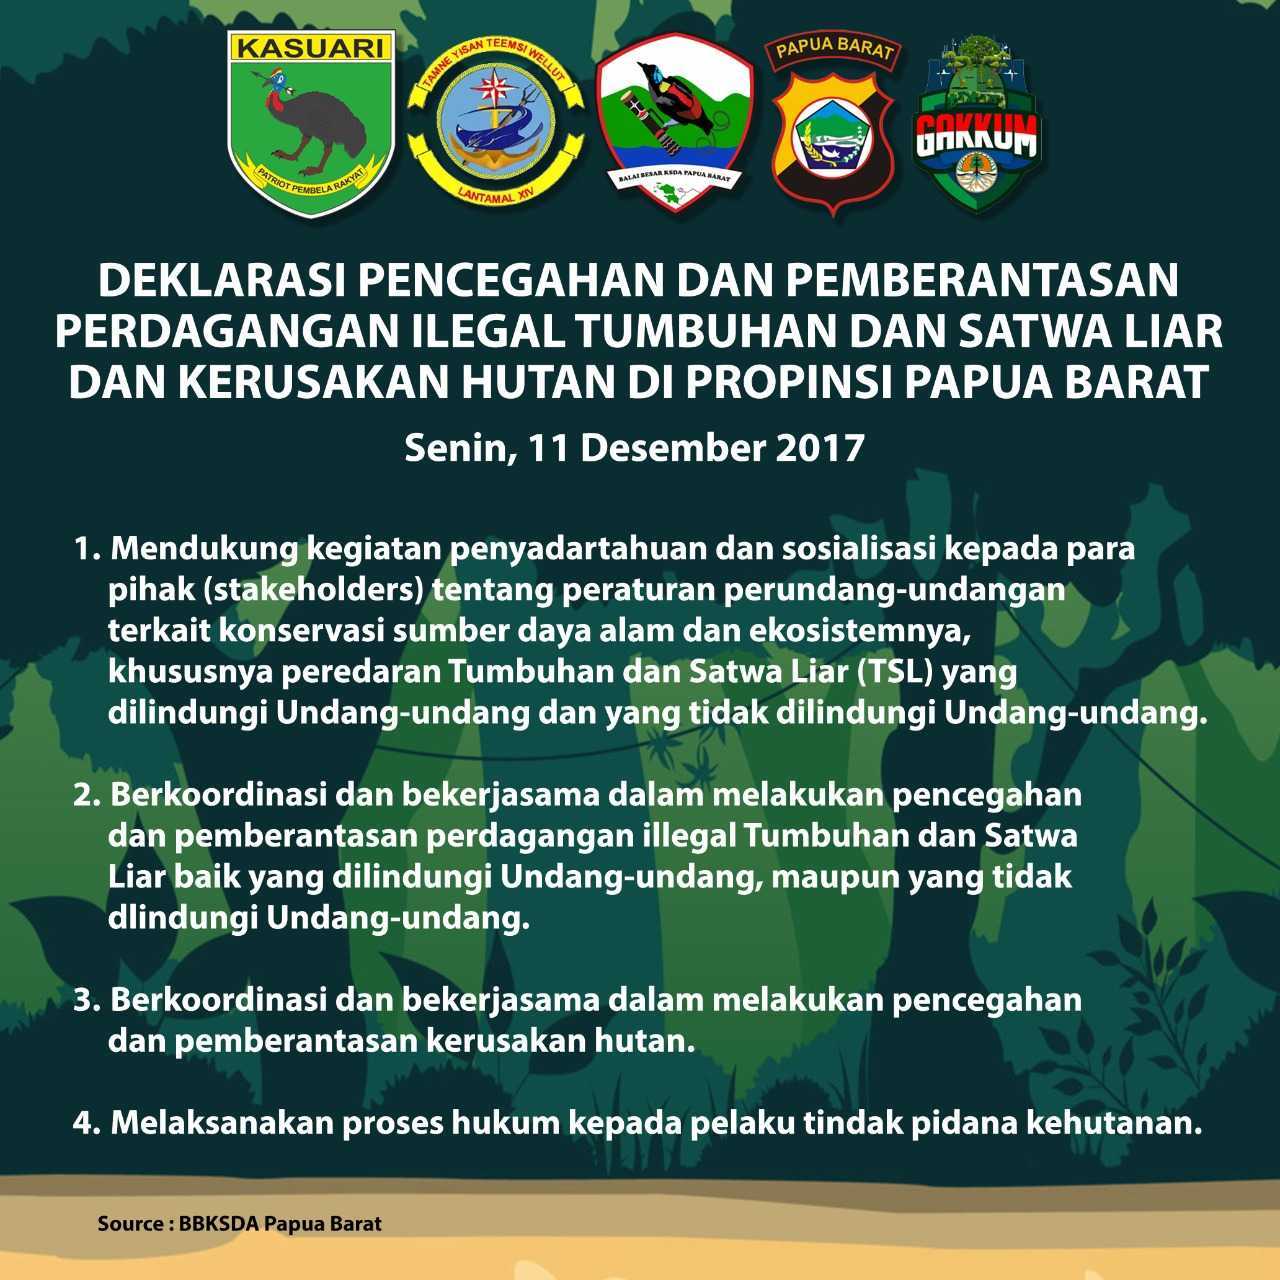 Oknum Tentara dalam Perdagangan Paruh Bengkok Papua [1]